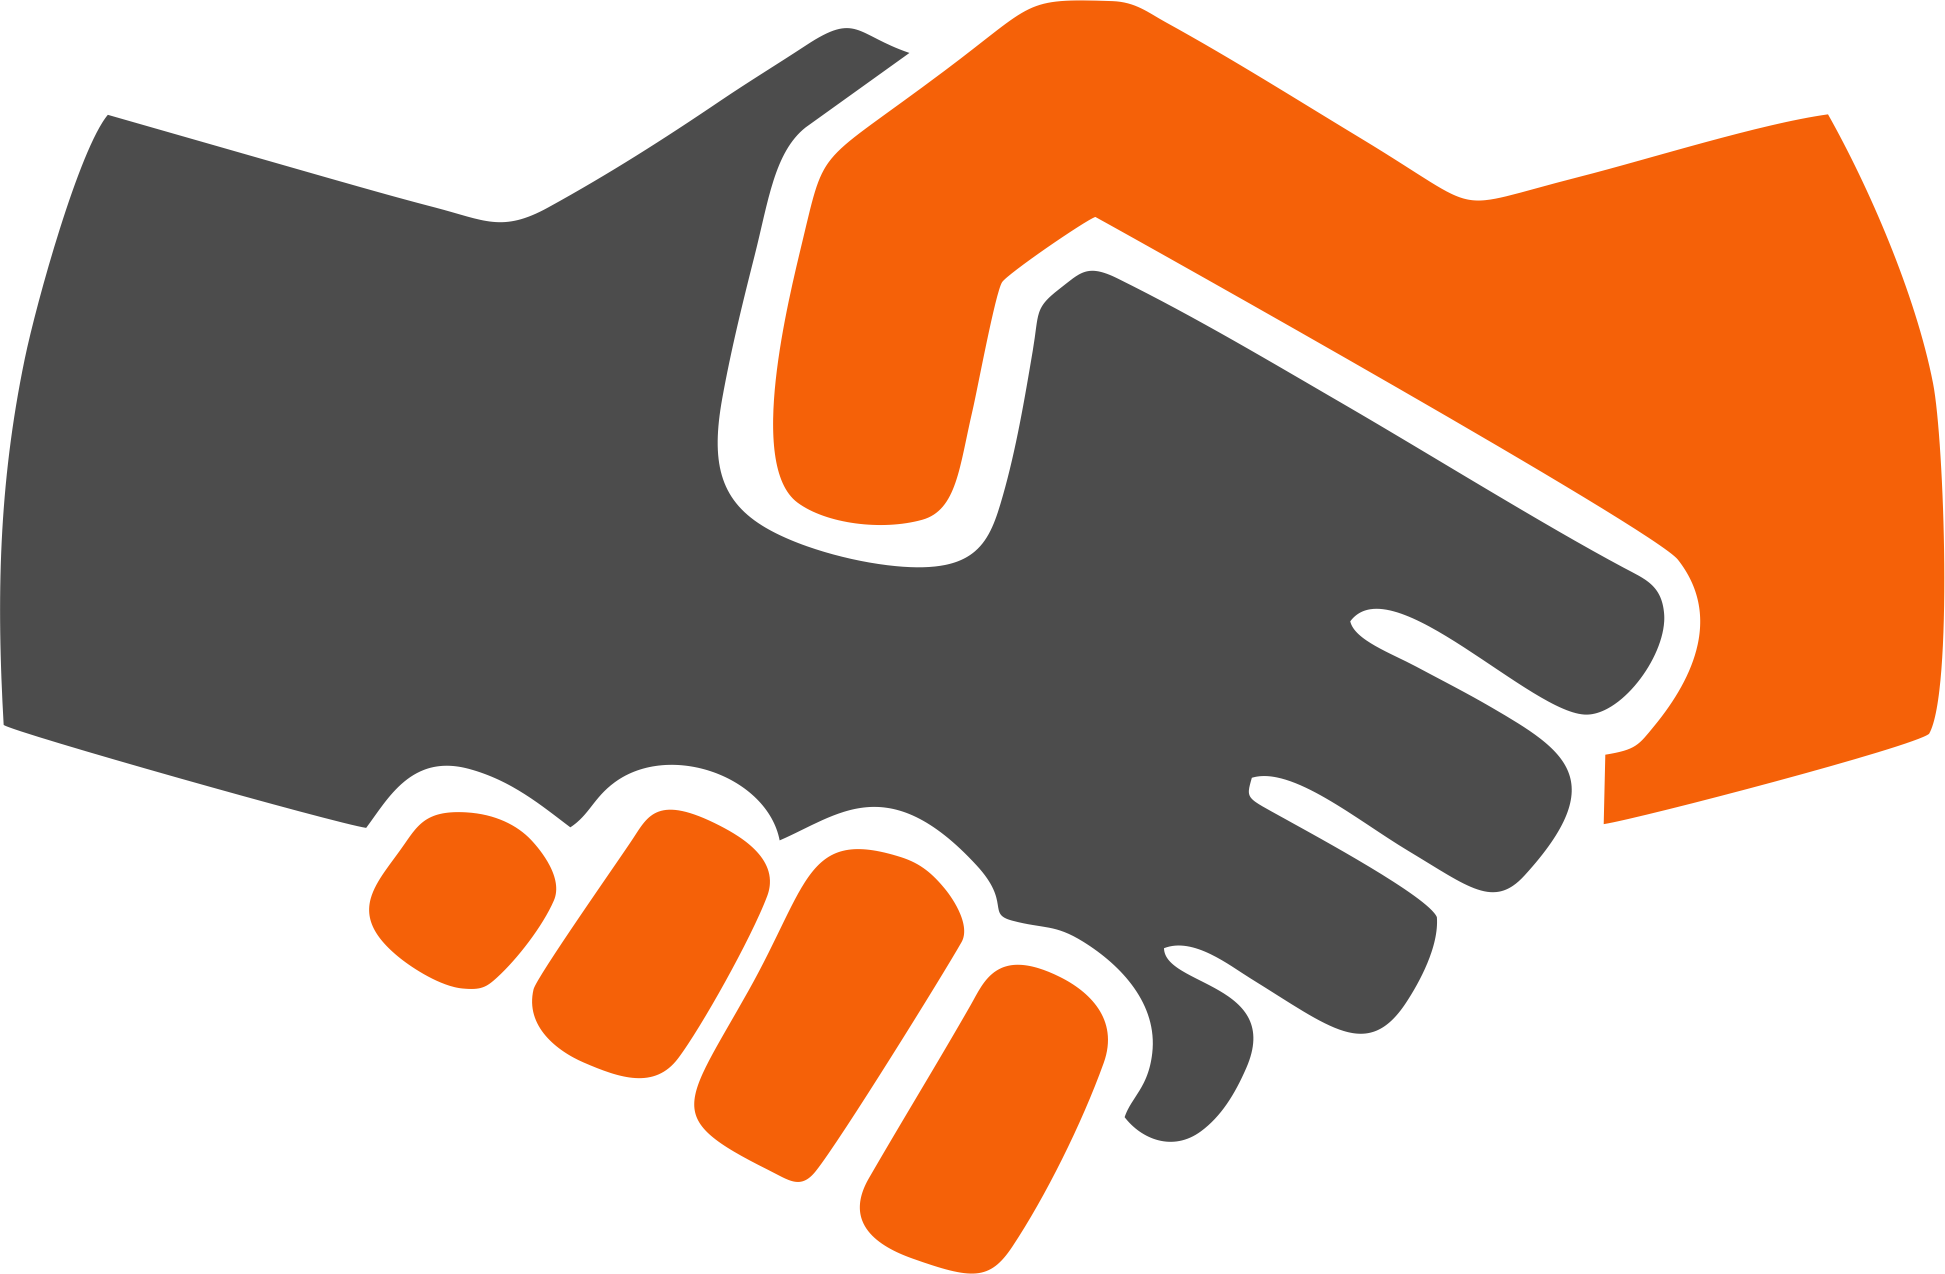 A Handshake With Orange And Black Hands